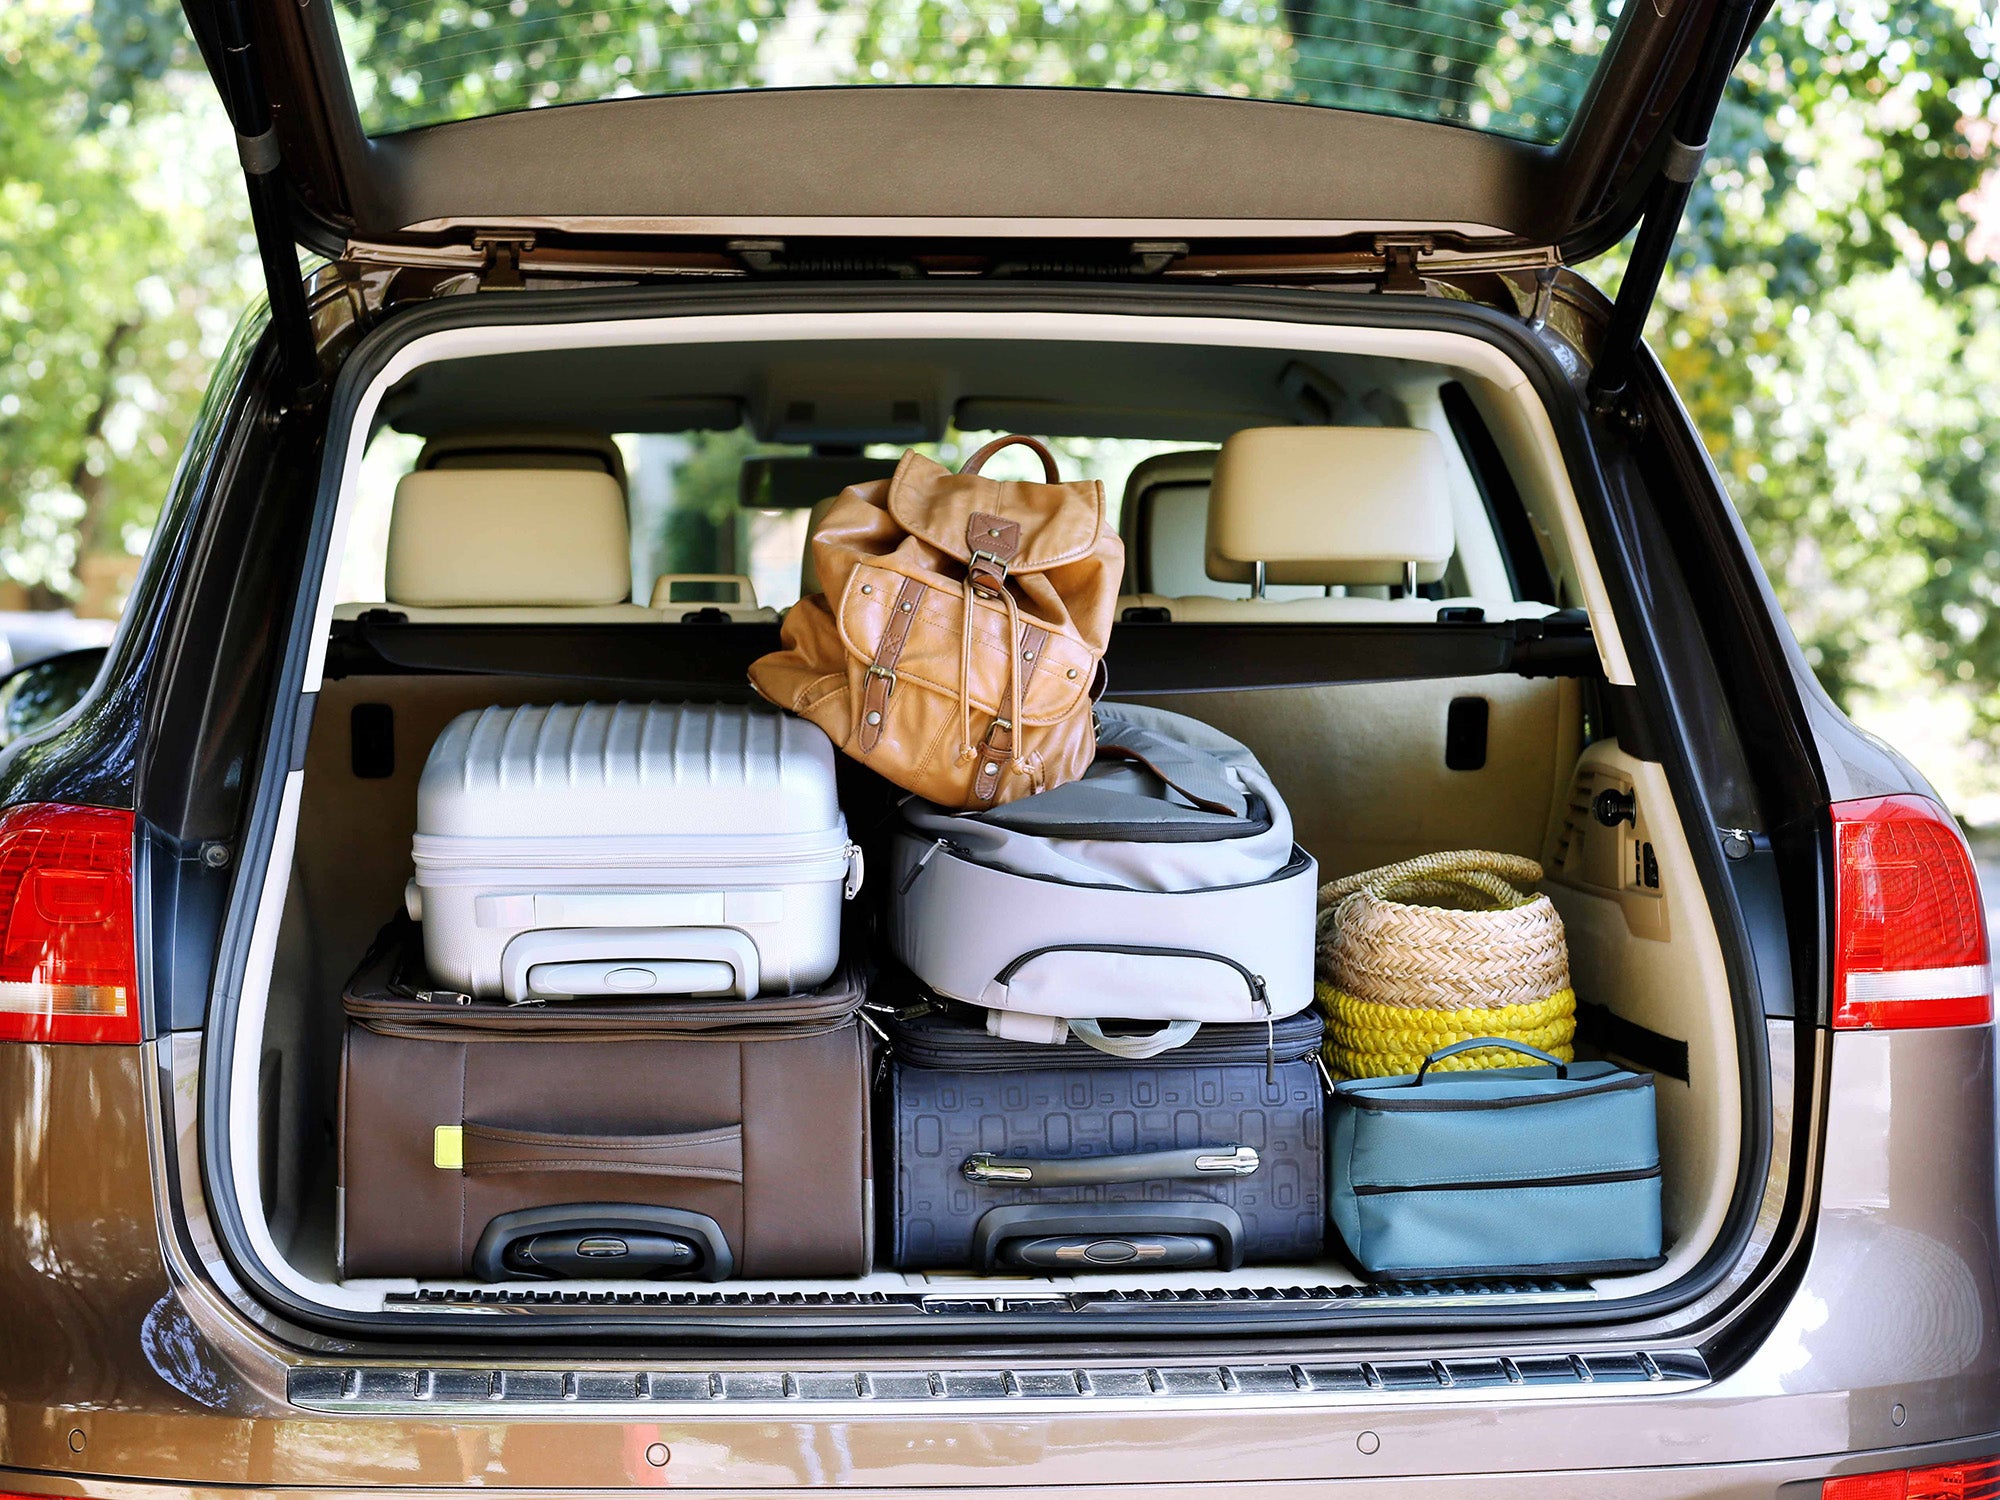 https://www.popsci.com/uploads/2022/06/01/hatchback-trunk-with-luggage-for-summer-vacation.jpg?auto=webp